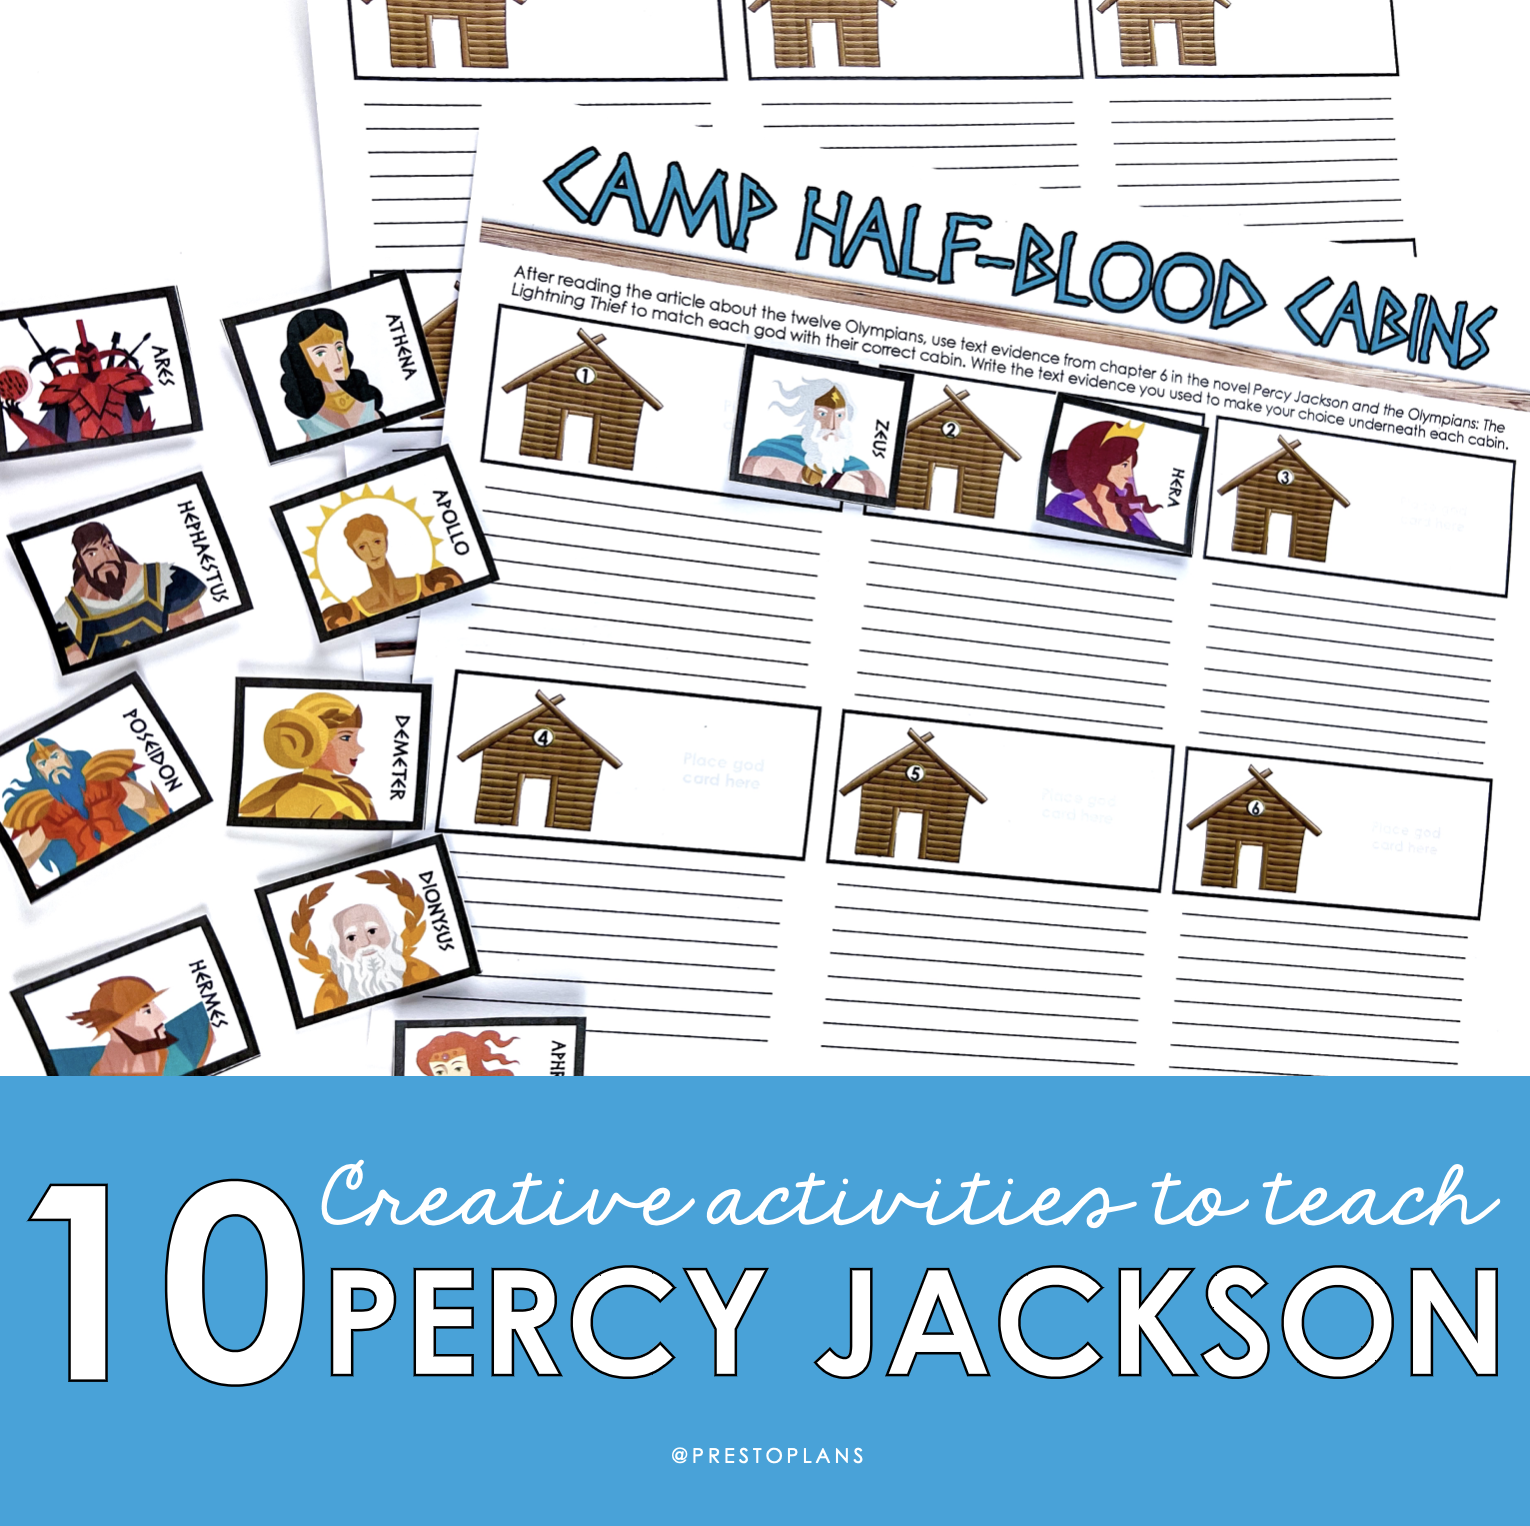 10 Creative Activities to Teach Percy Jackson & The Olympians: The